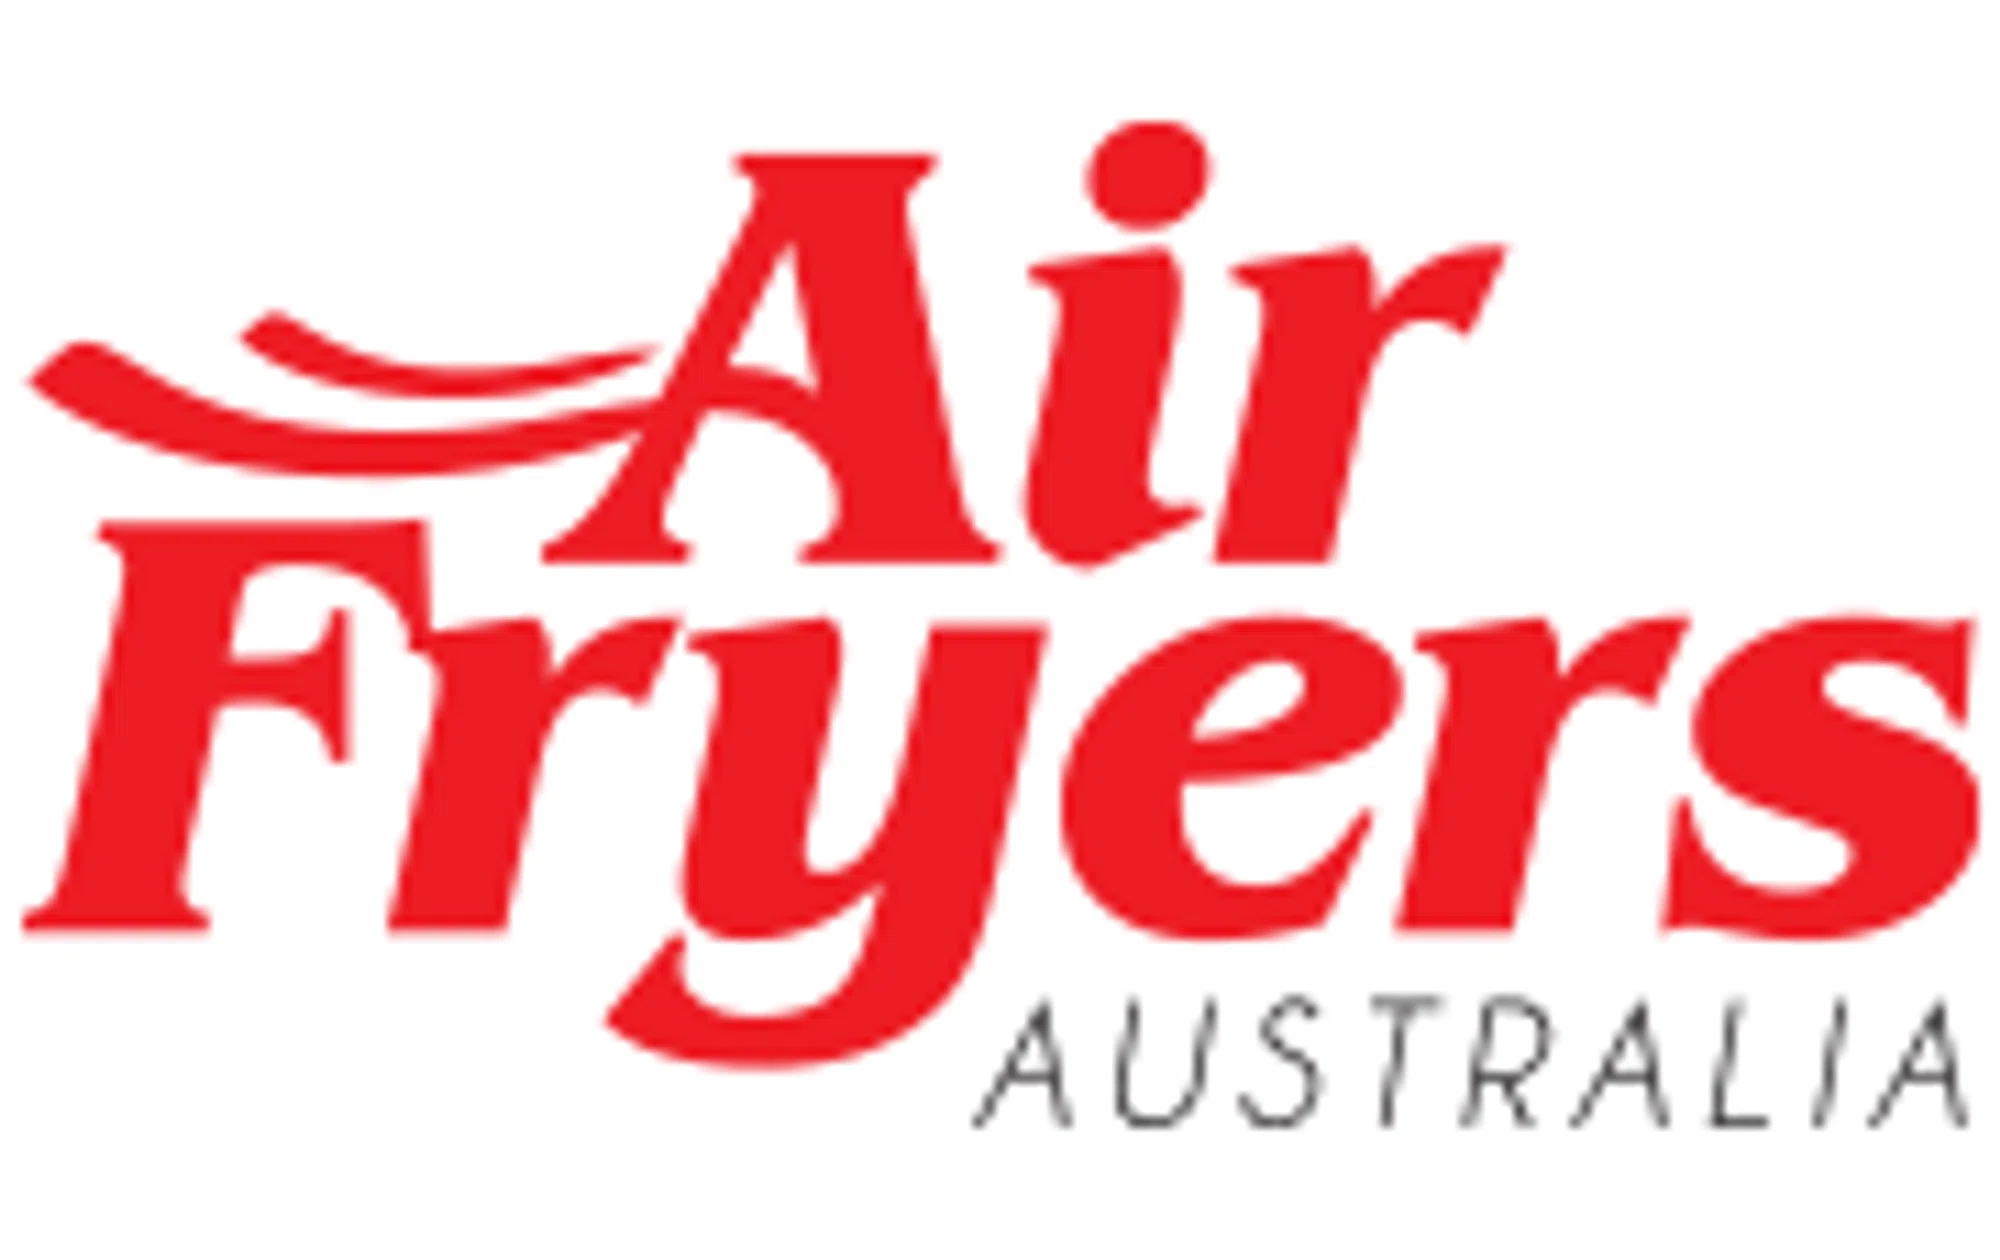 Air Fryers Australia